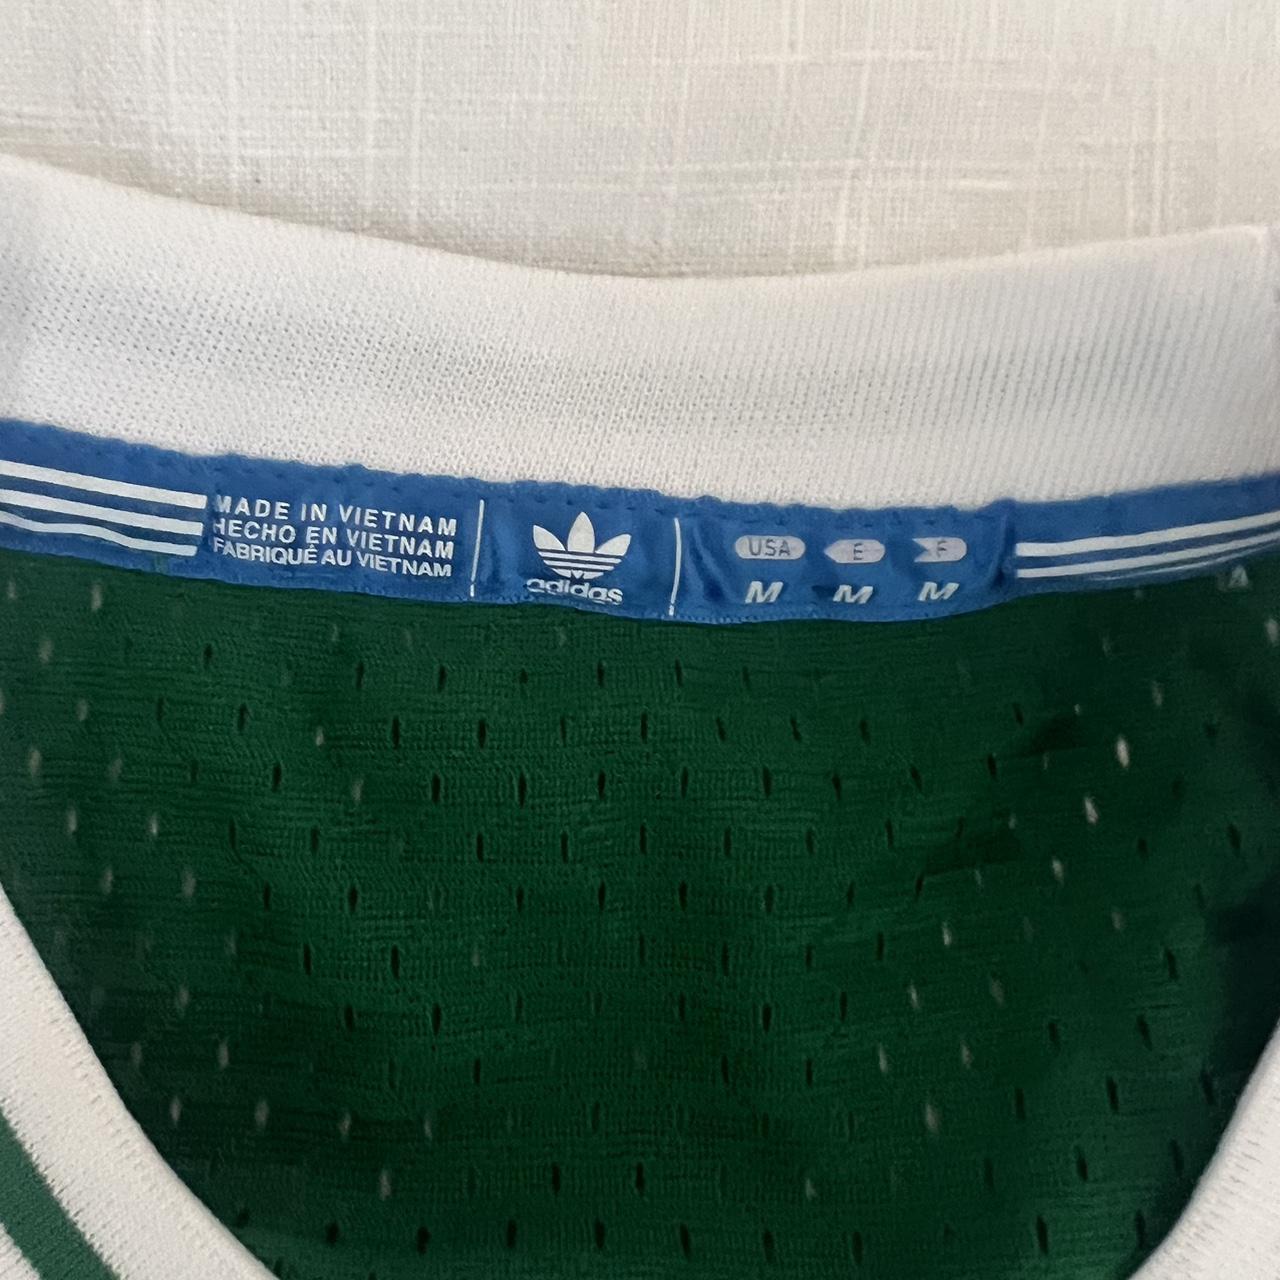 Larry Bird Celtics jersey Adidas hardwood classics - Depop